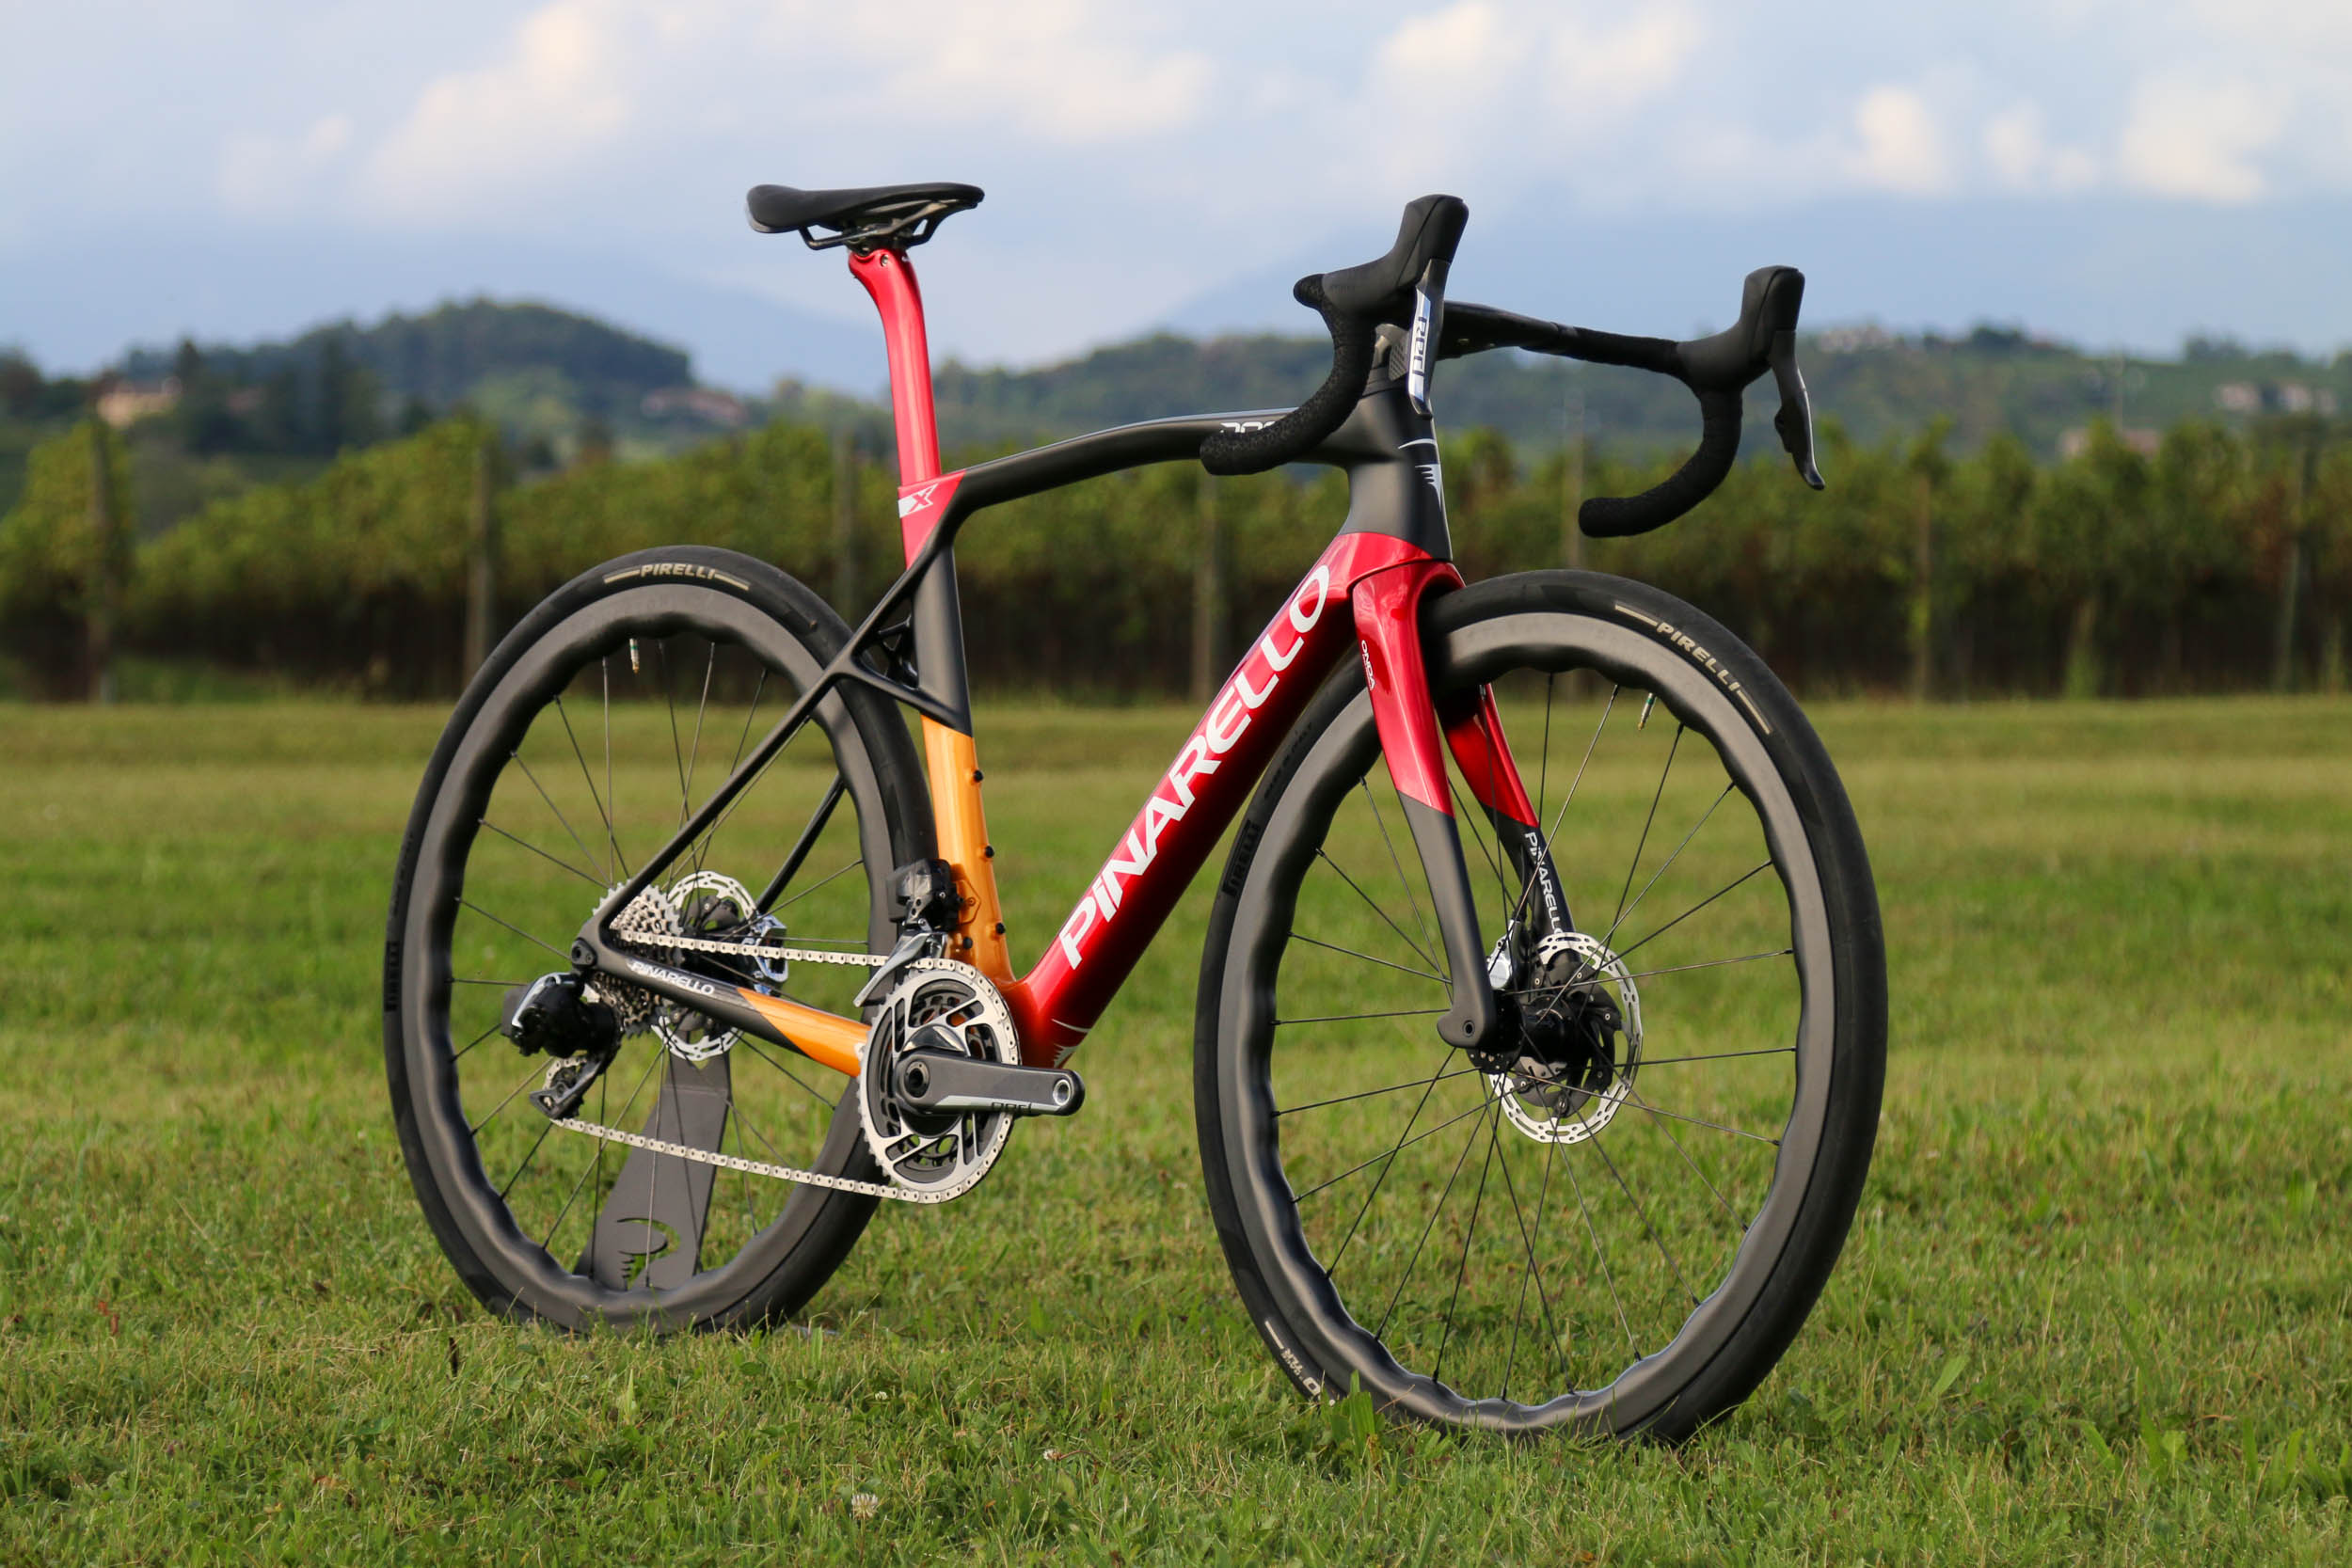 New Pinarello Dogma X endurance bike features wild comfort